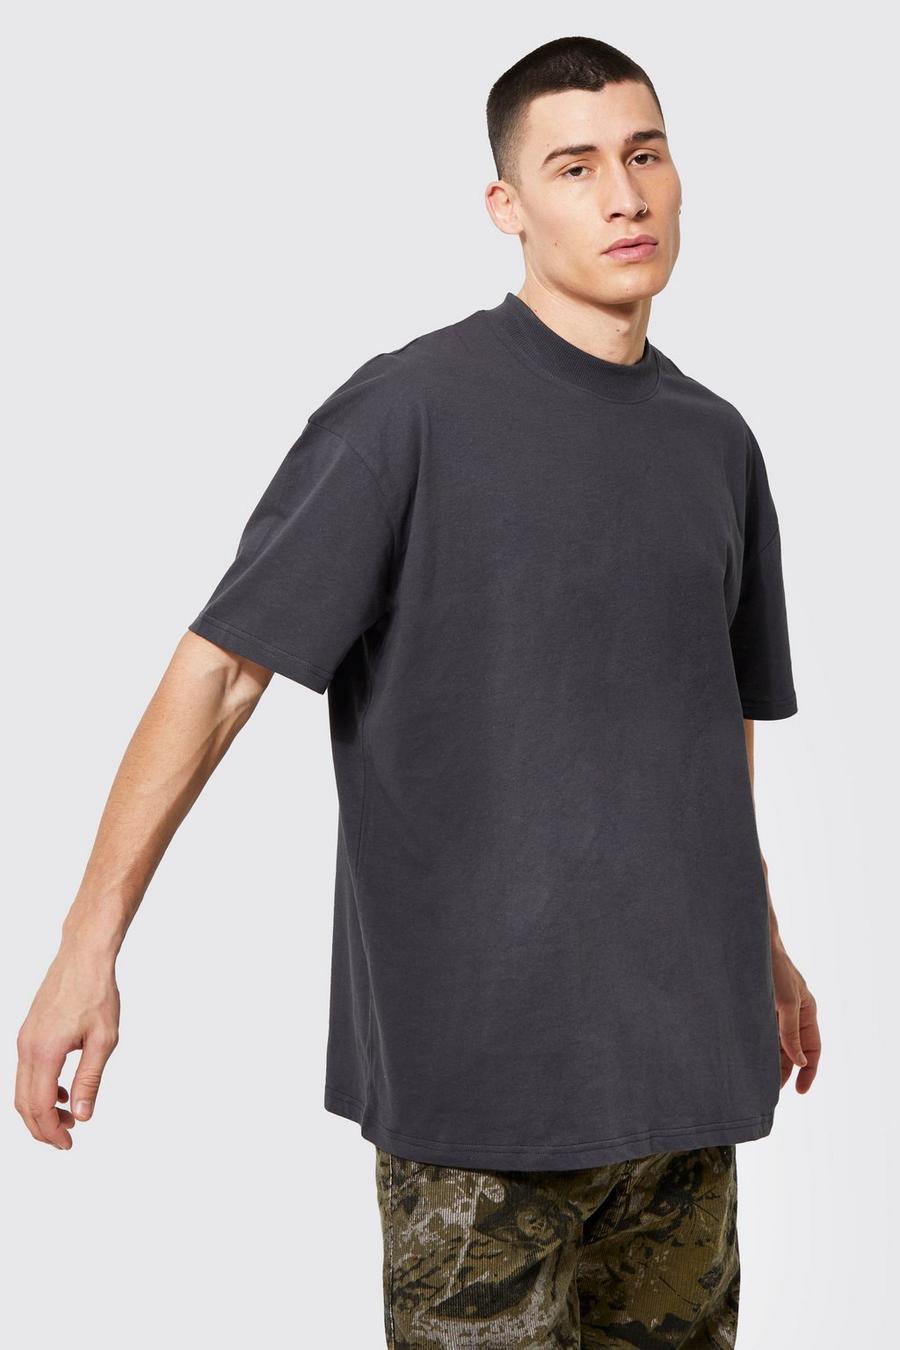 T-shirt oversize en coton REEL, Charcoal grey